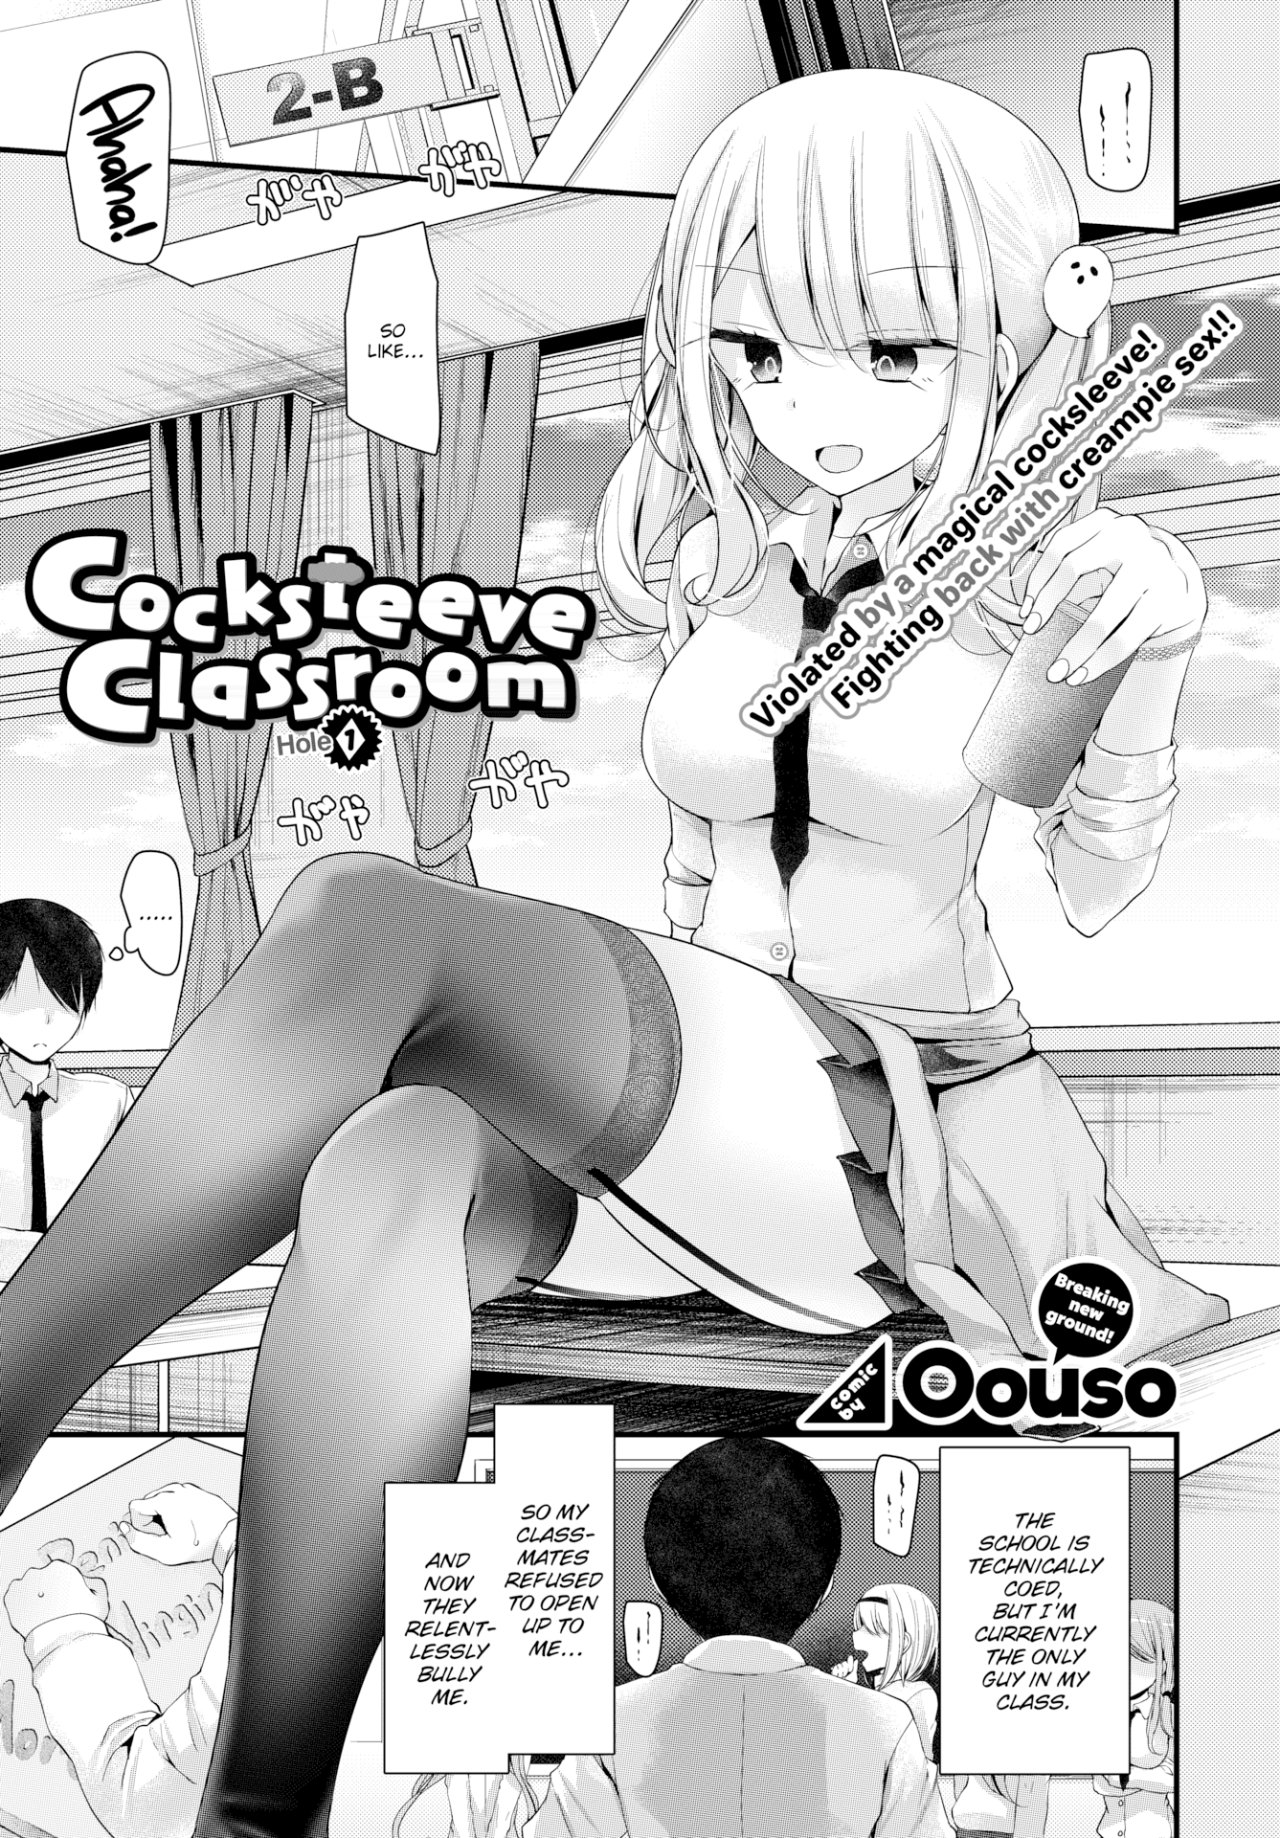 Cocksleeve Classroom - Hole 1 - 0